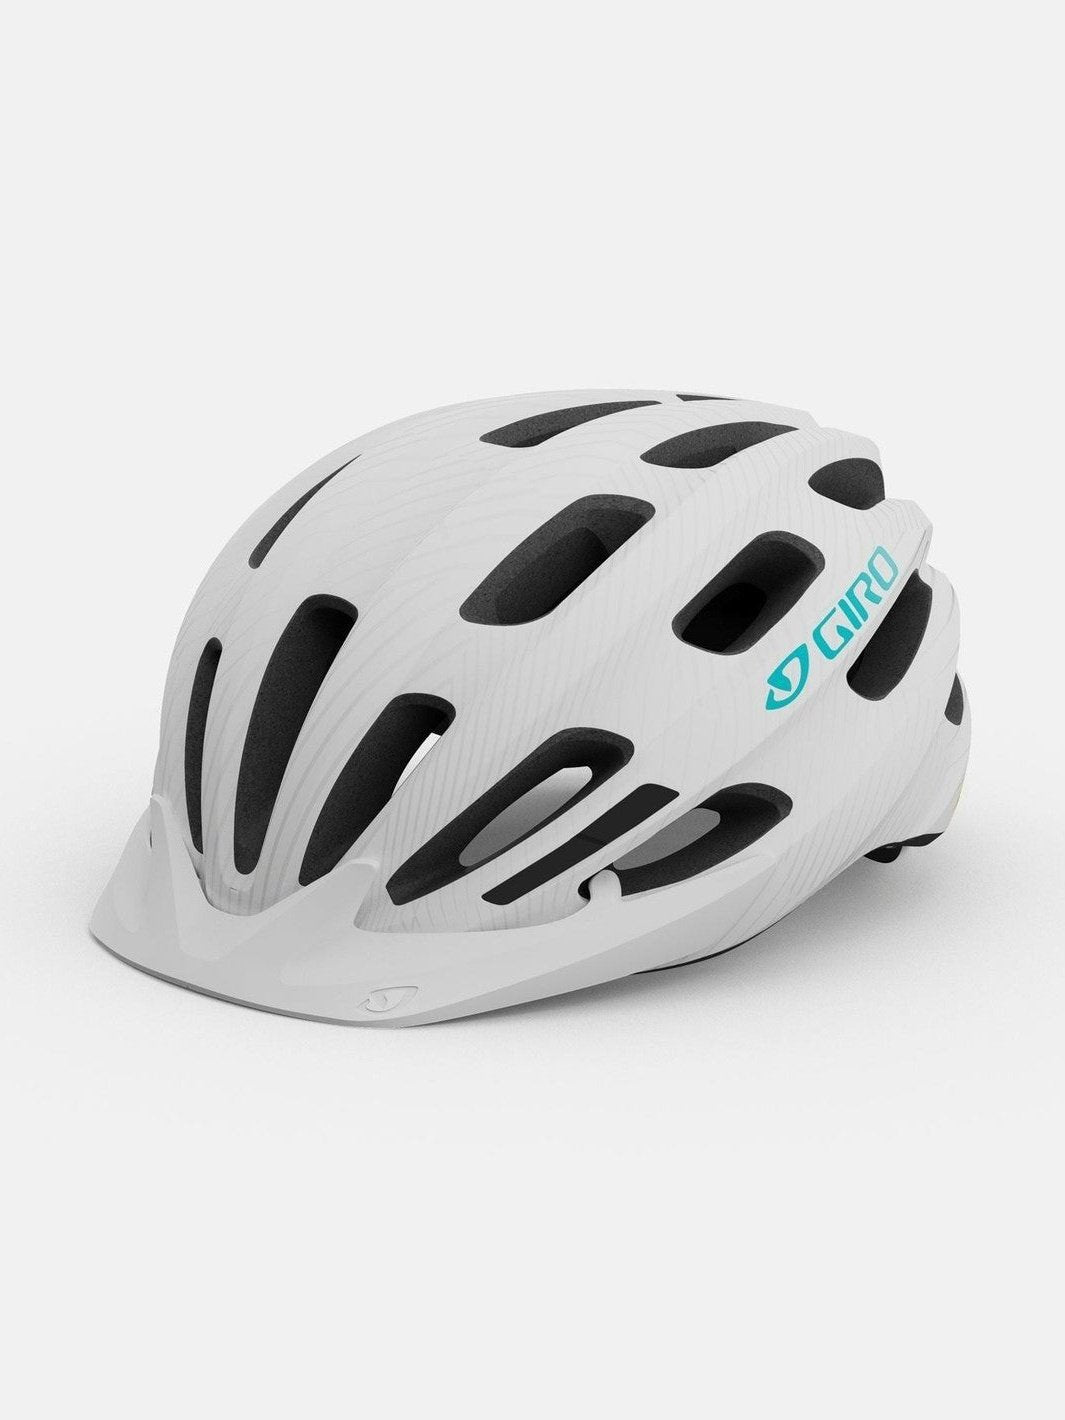 Giro Women's Vasona MIPS Helmet